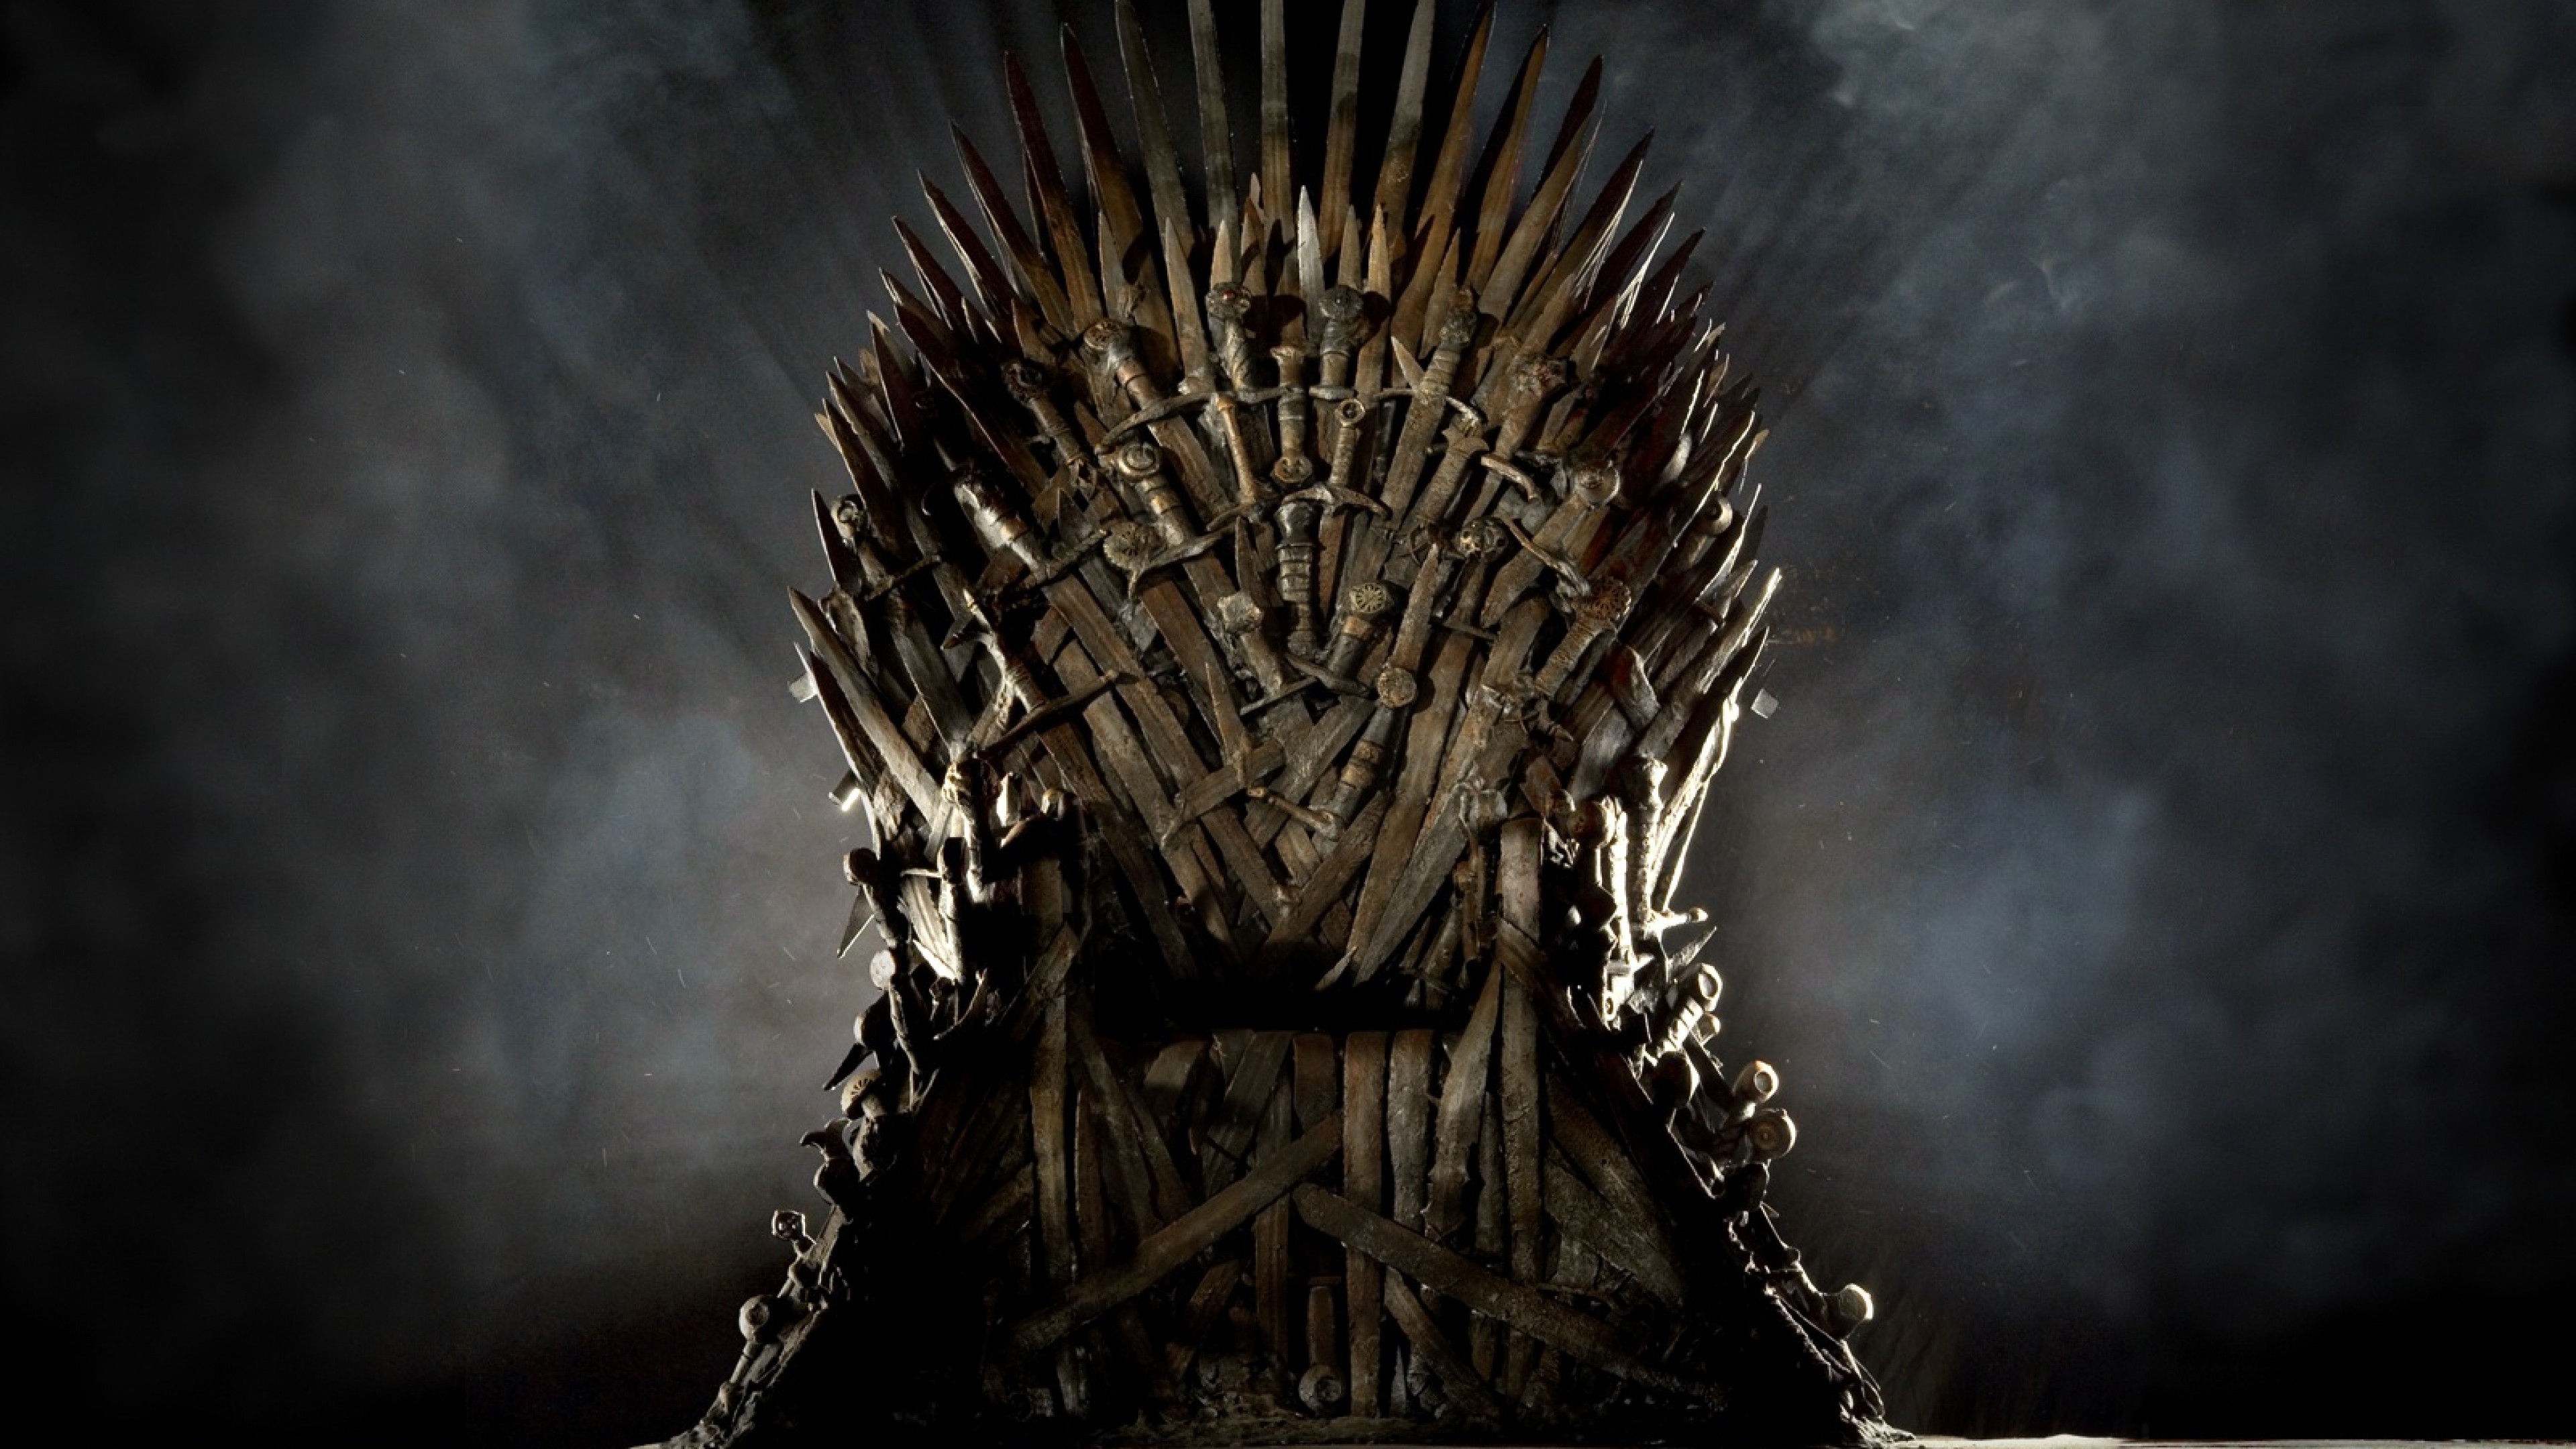 4k Game Of Thrones Wallpaper Image